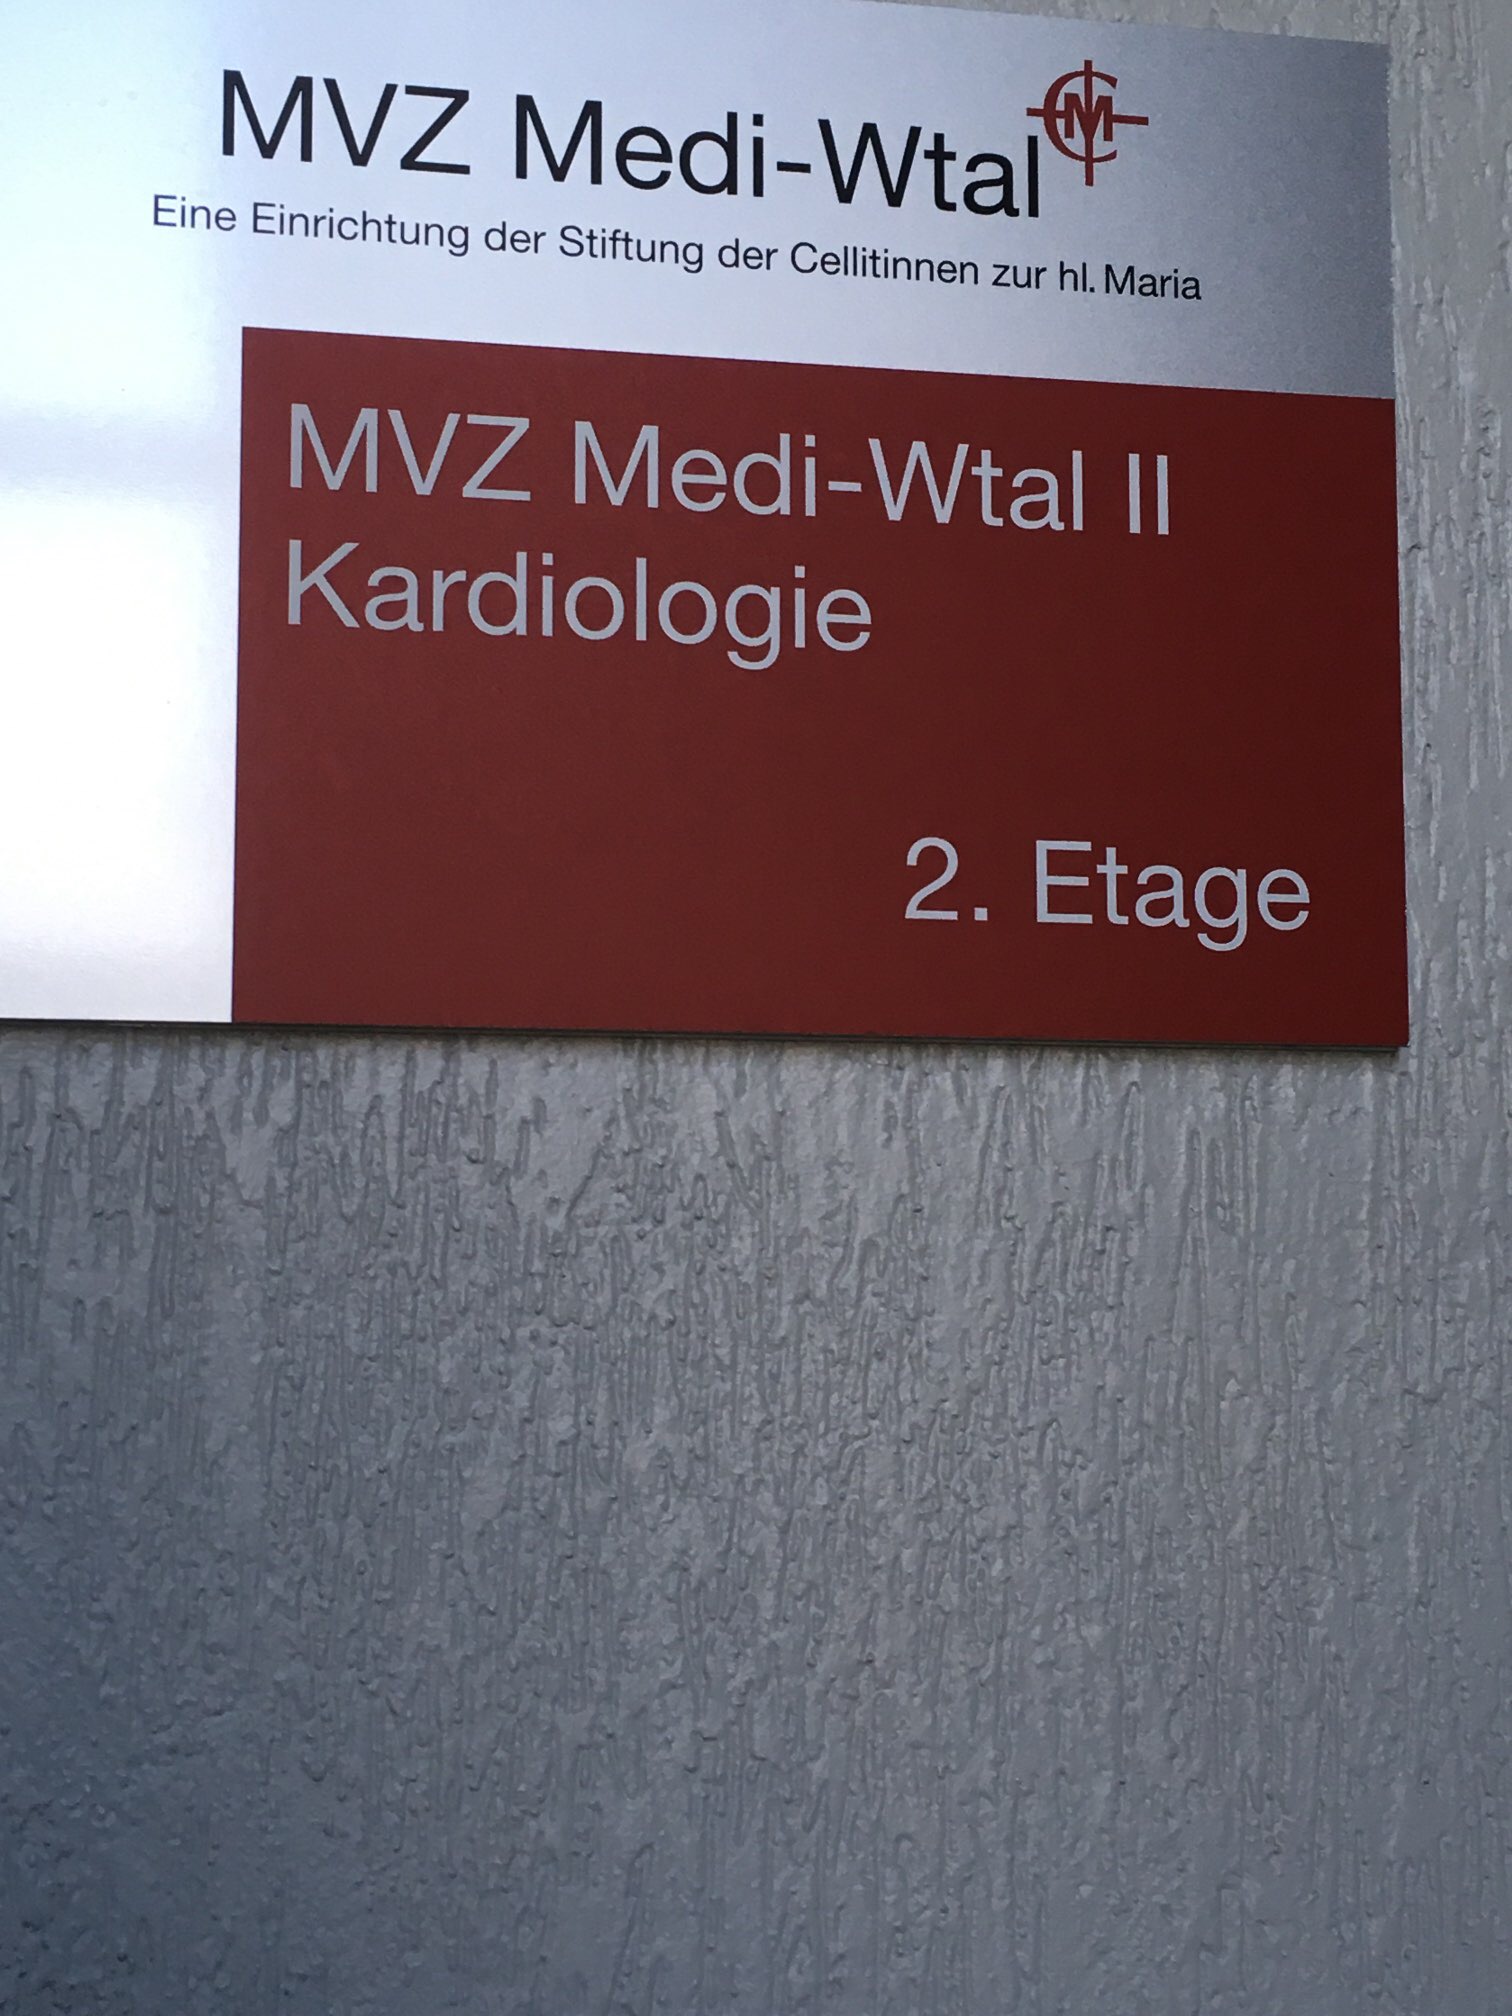 Bild 5 MVZ Medi-Wtal II der MVZ Medi-Wtal gGmbH in Wuppertal